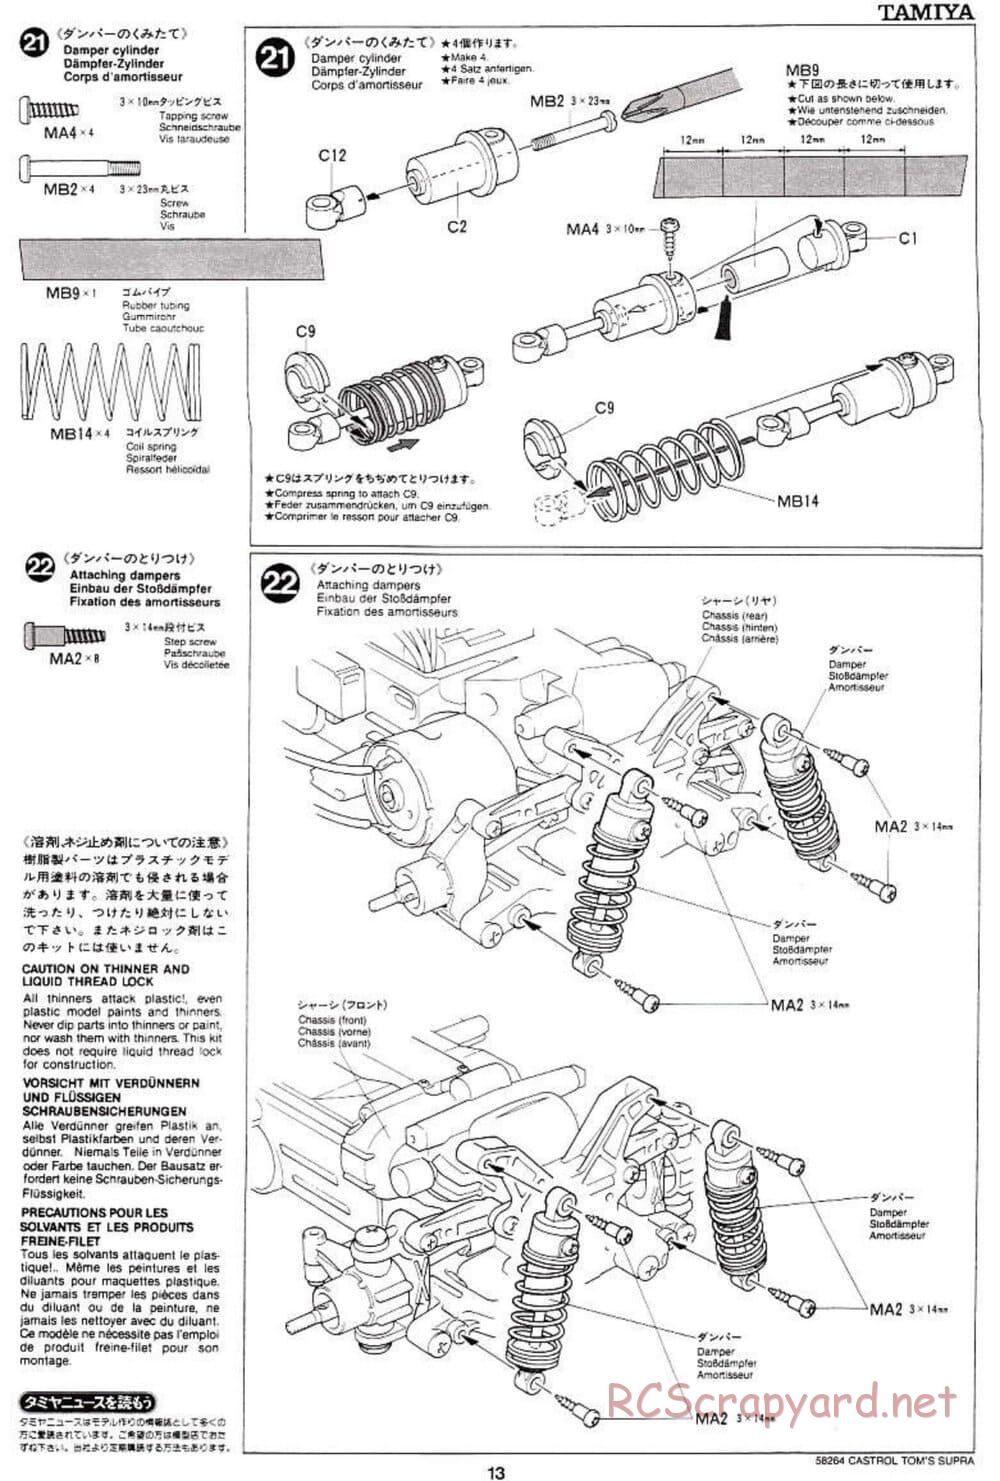 Tamiya - Castrol Tom's Supra 2000 - TL-01 Chassis - Manual - Page 13